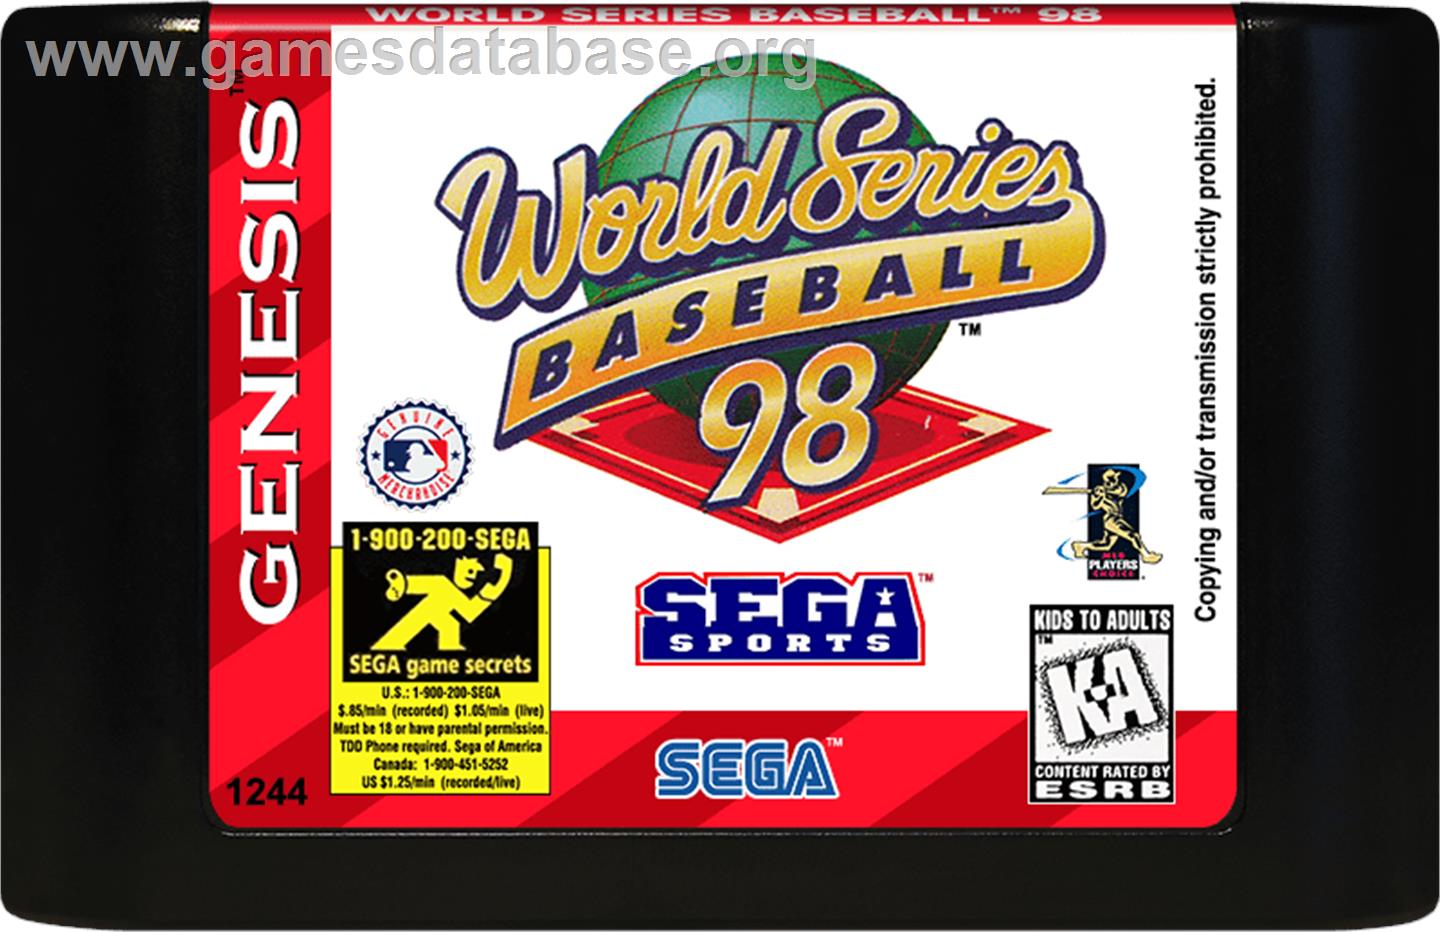 World Series Baseball '98 - Sega Genesis - Artwork - Cartridge